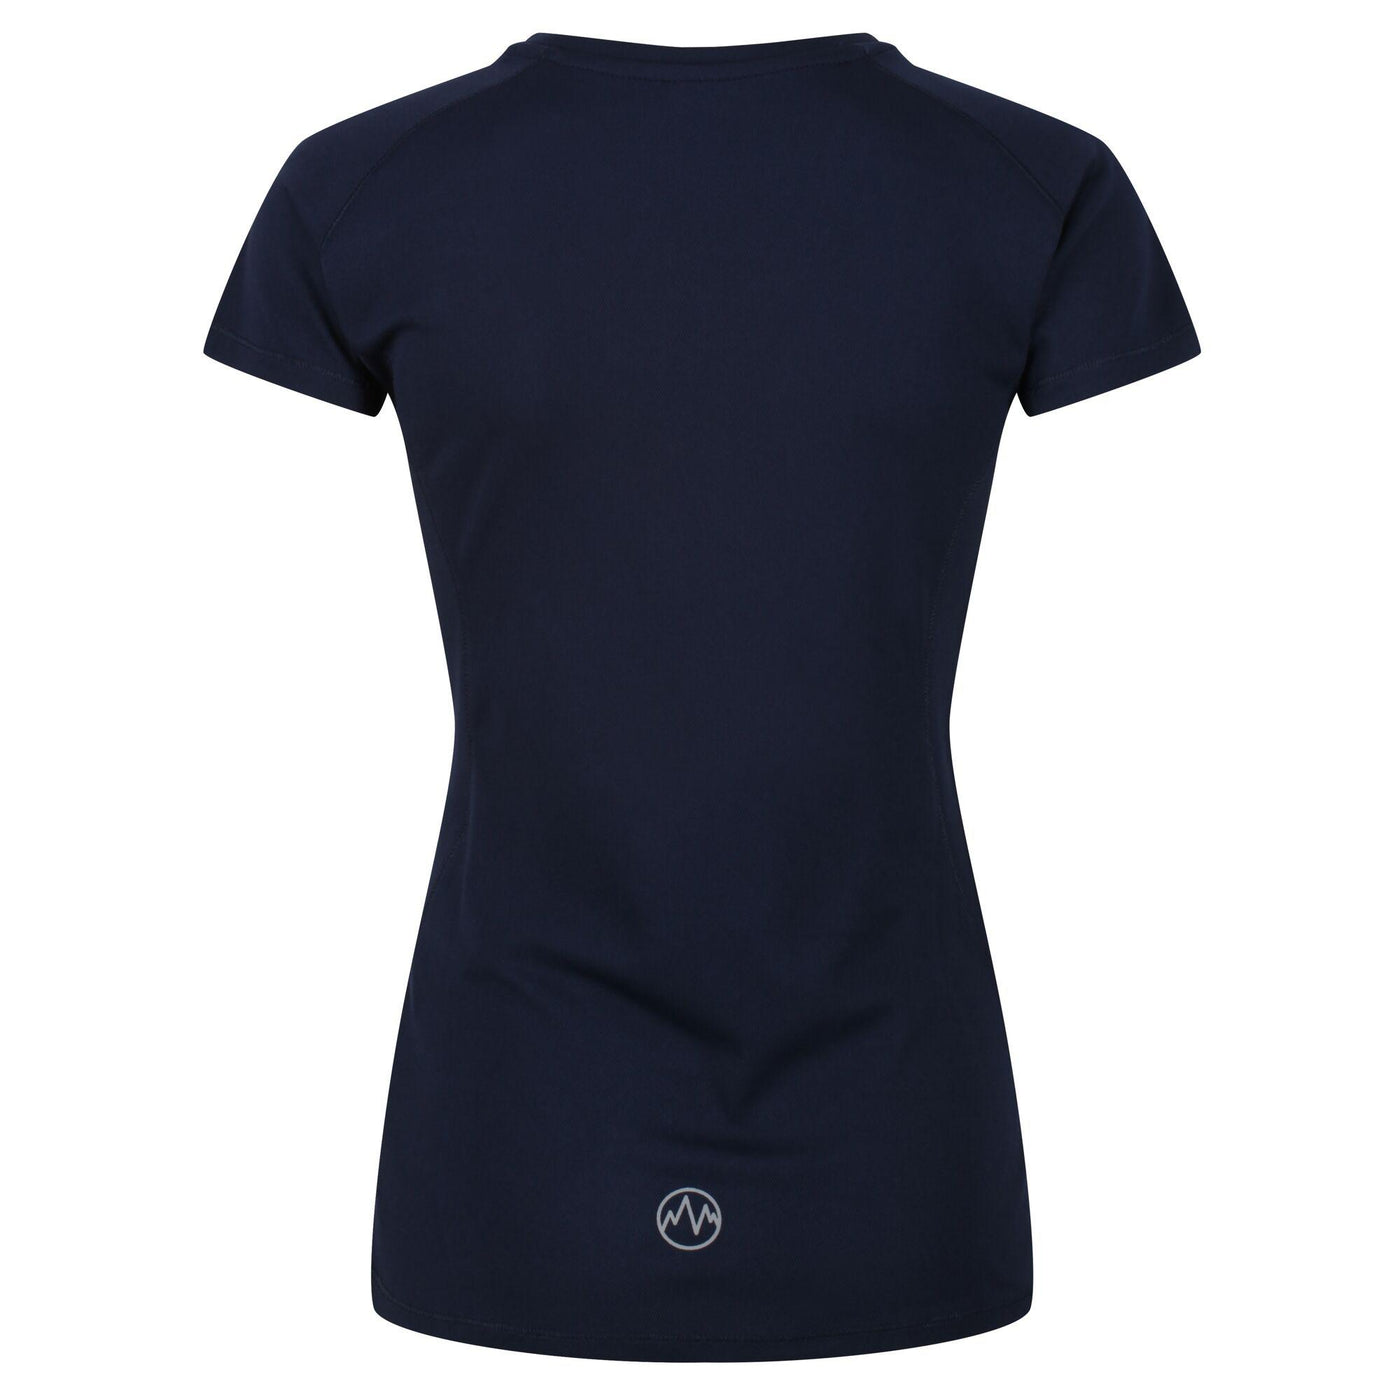 Regatta Professional Womens Beijing Lightweight Cool and Dry T-Shirt Navy 2#colour_navy